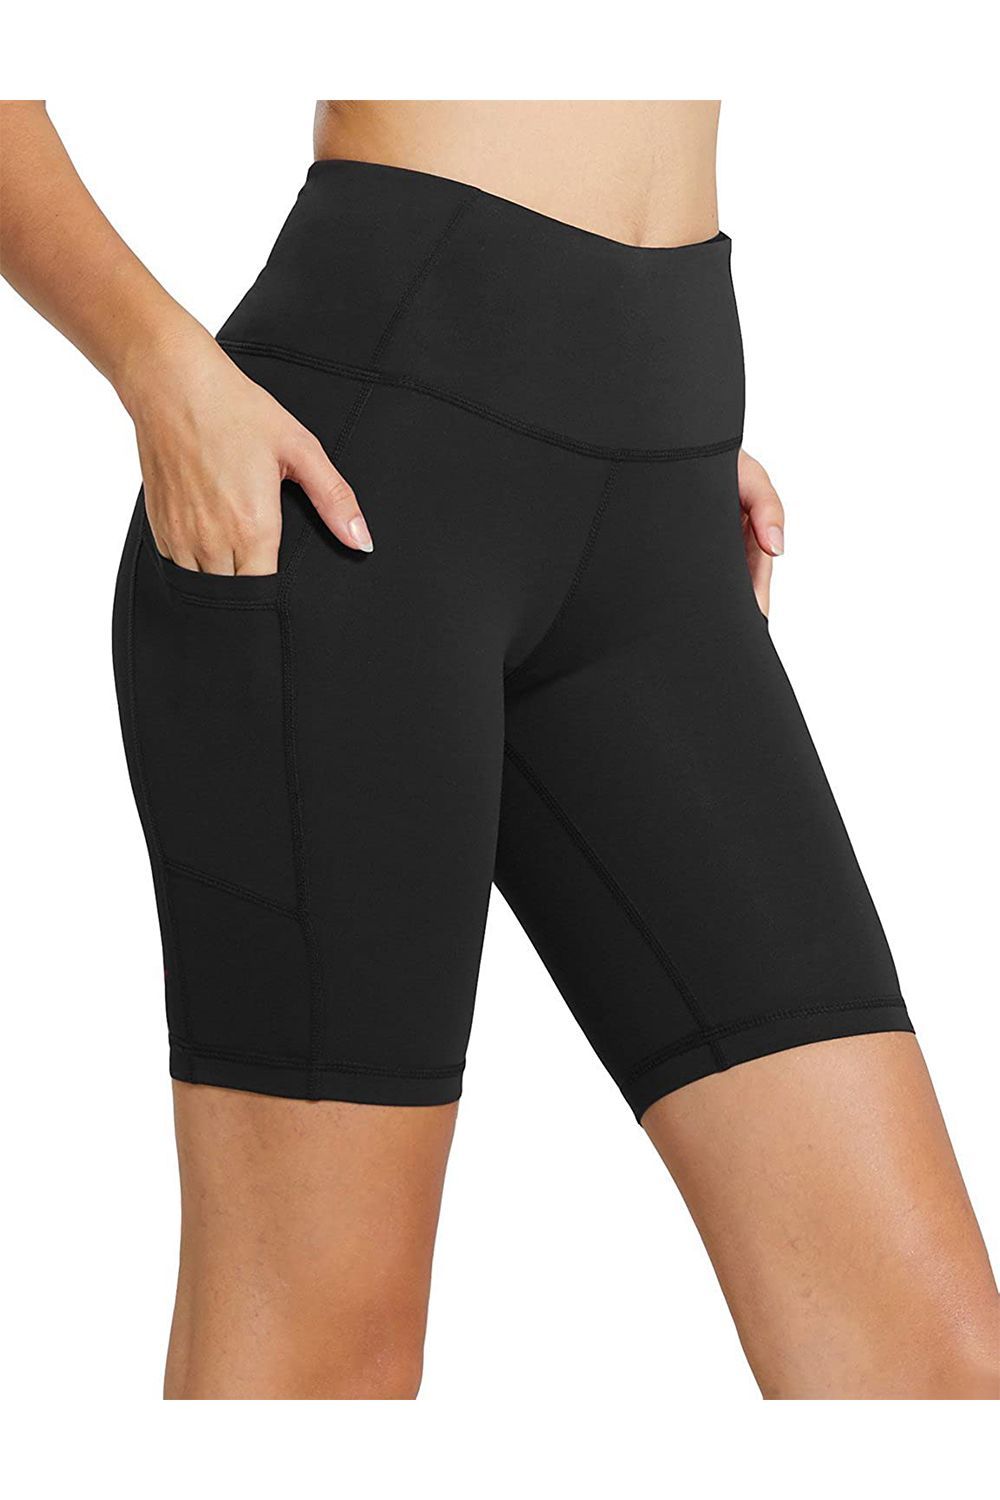 Z Gray, XL N\C Womens Running Shorts Yoga Shorts High Waist Sport Workout Running Tummy Control Shorts Athletic Shorts Pants 2 Side Pockets 